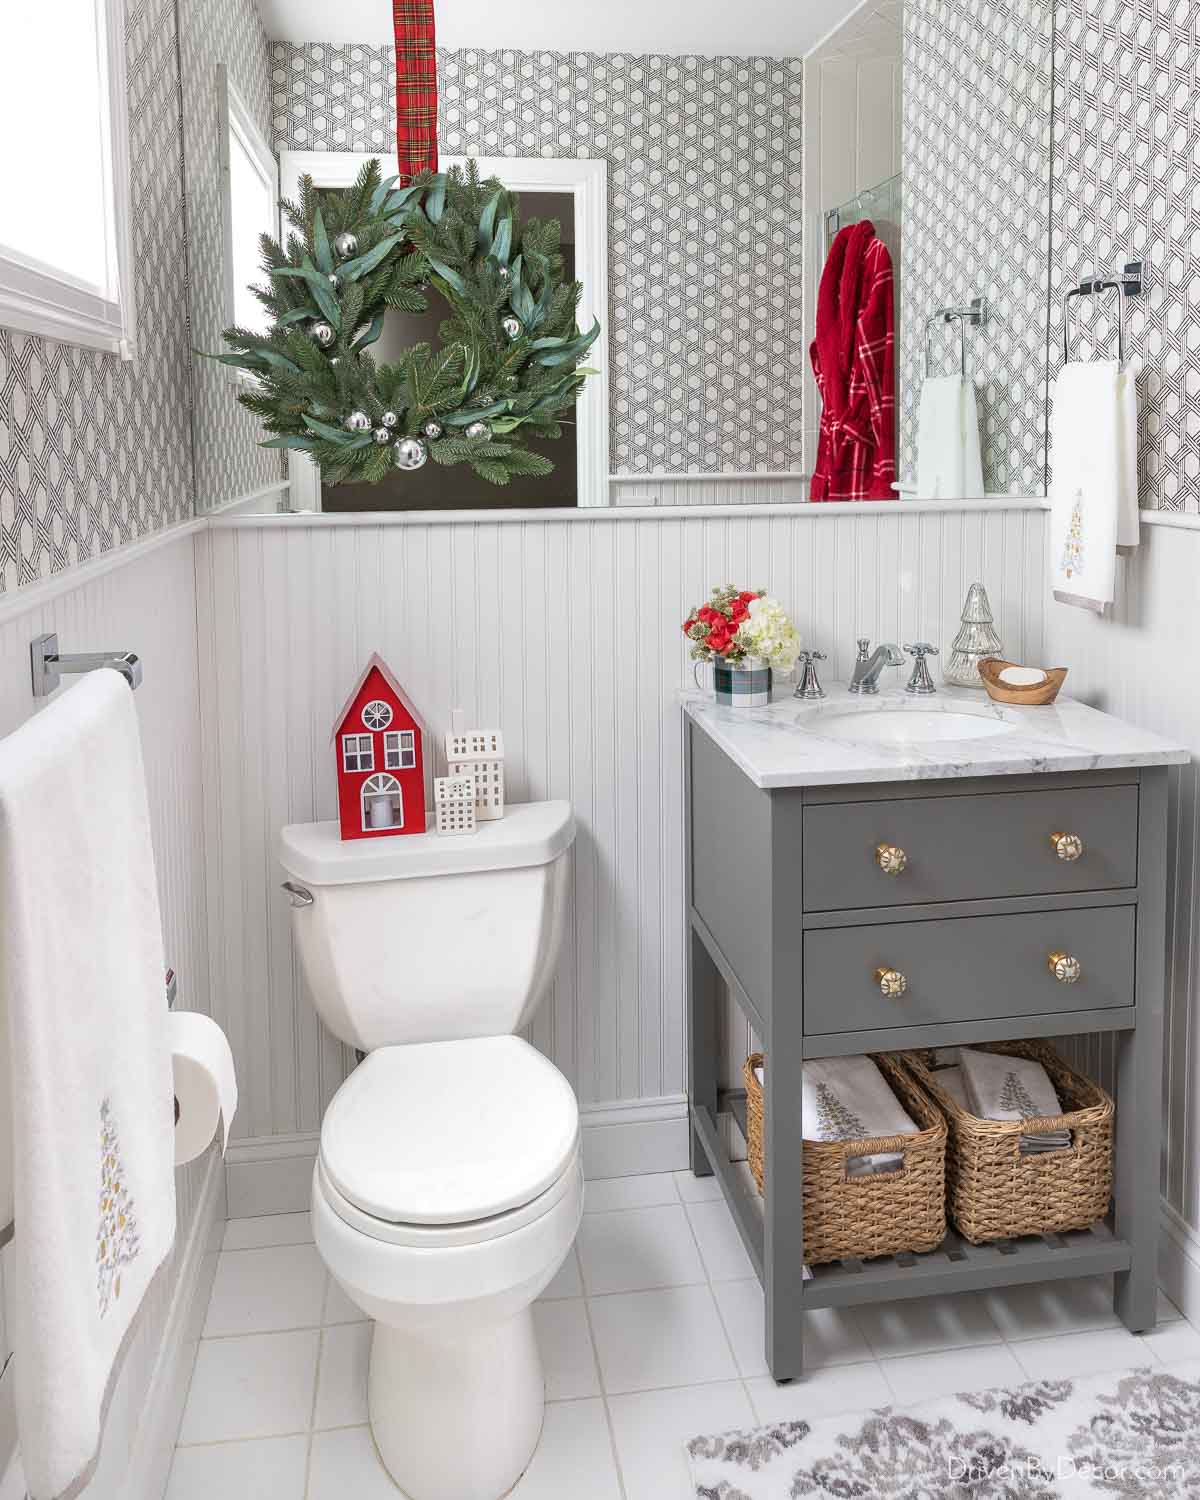 Guest bathroom ideas at Christmas